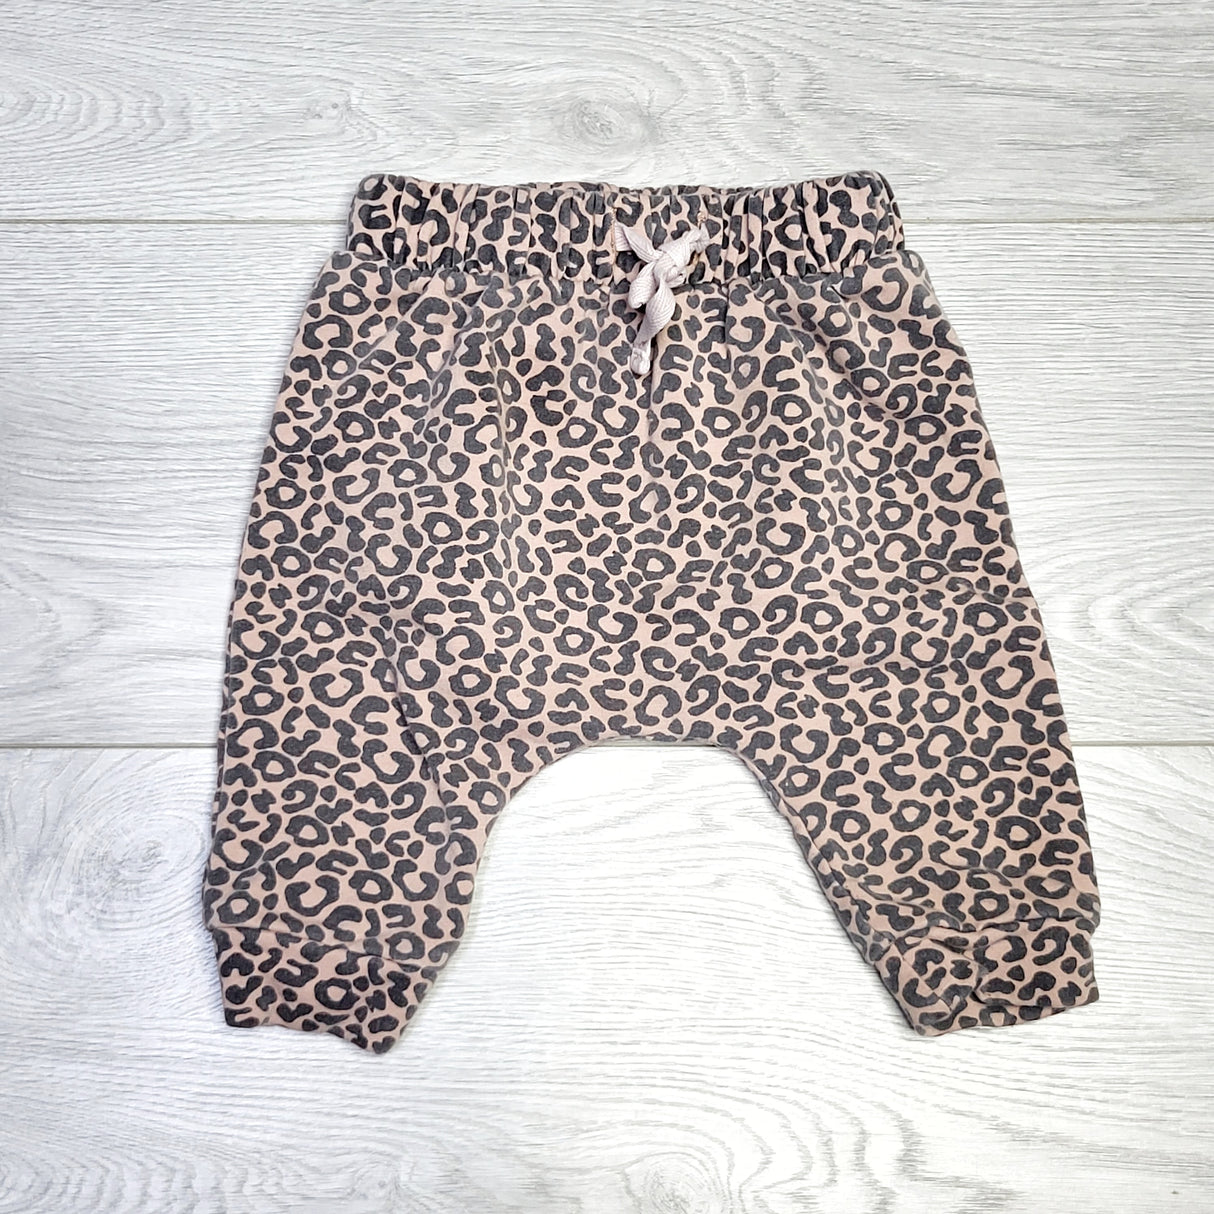 KJHN1 - Nordstrom leopard print sweatpants. Size 6 months